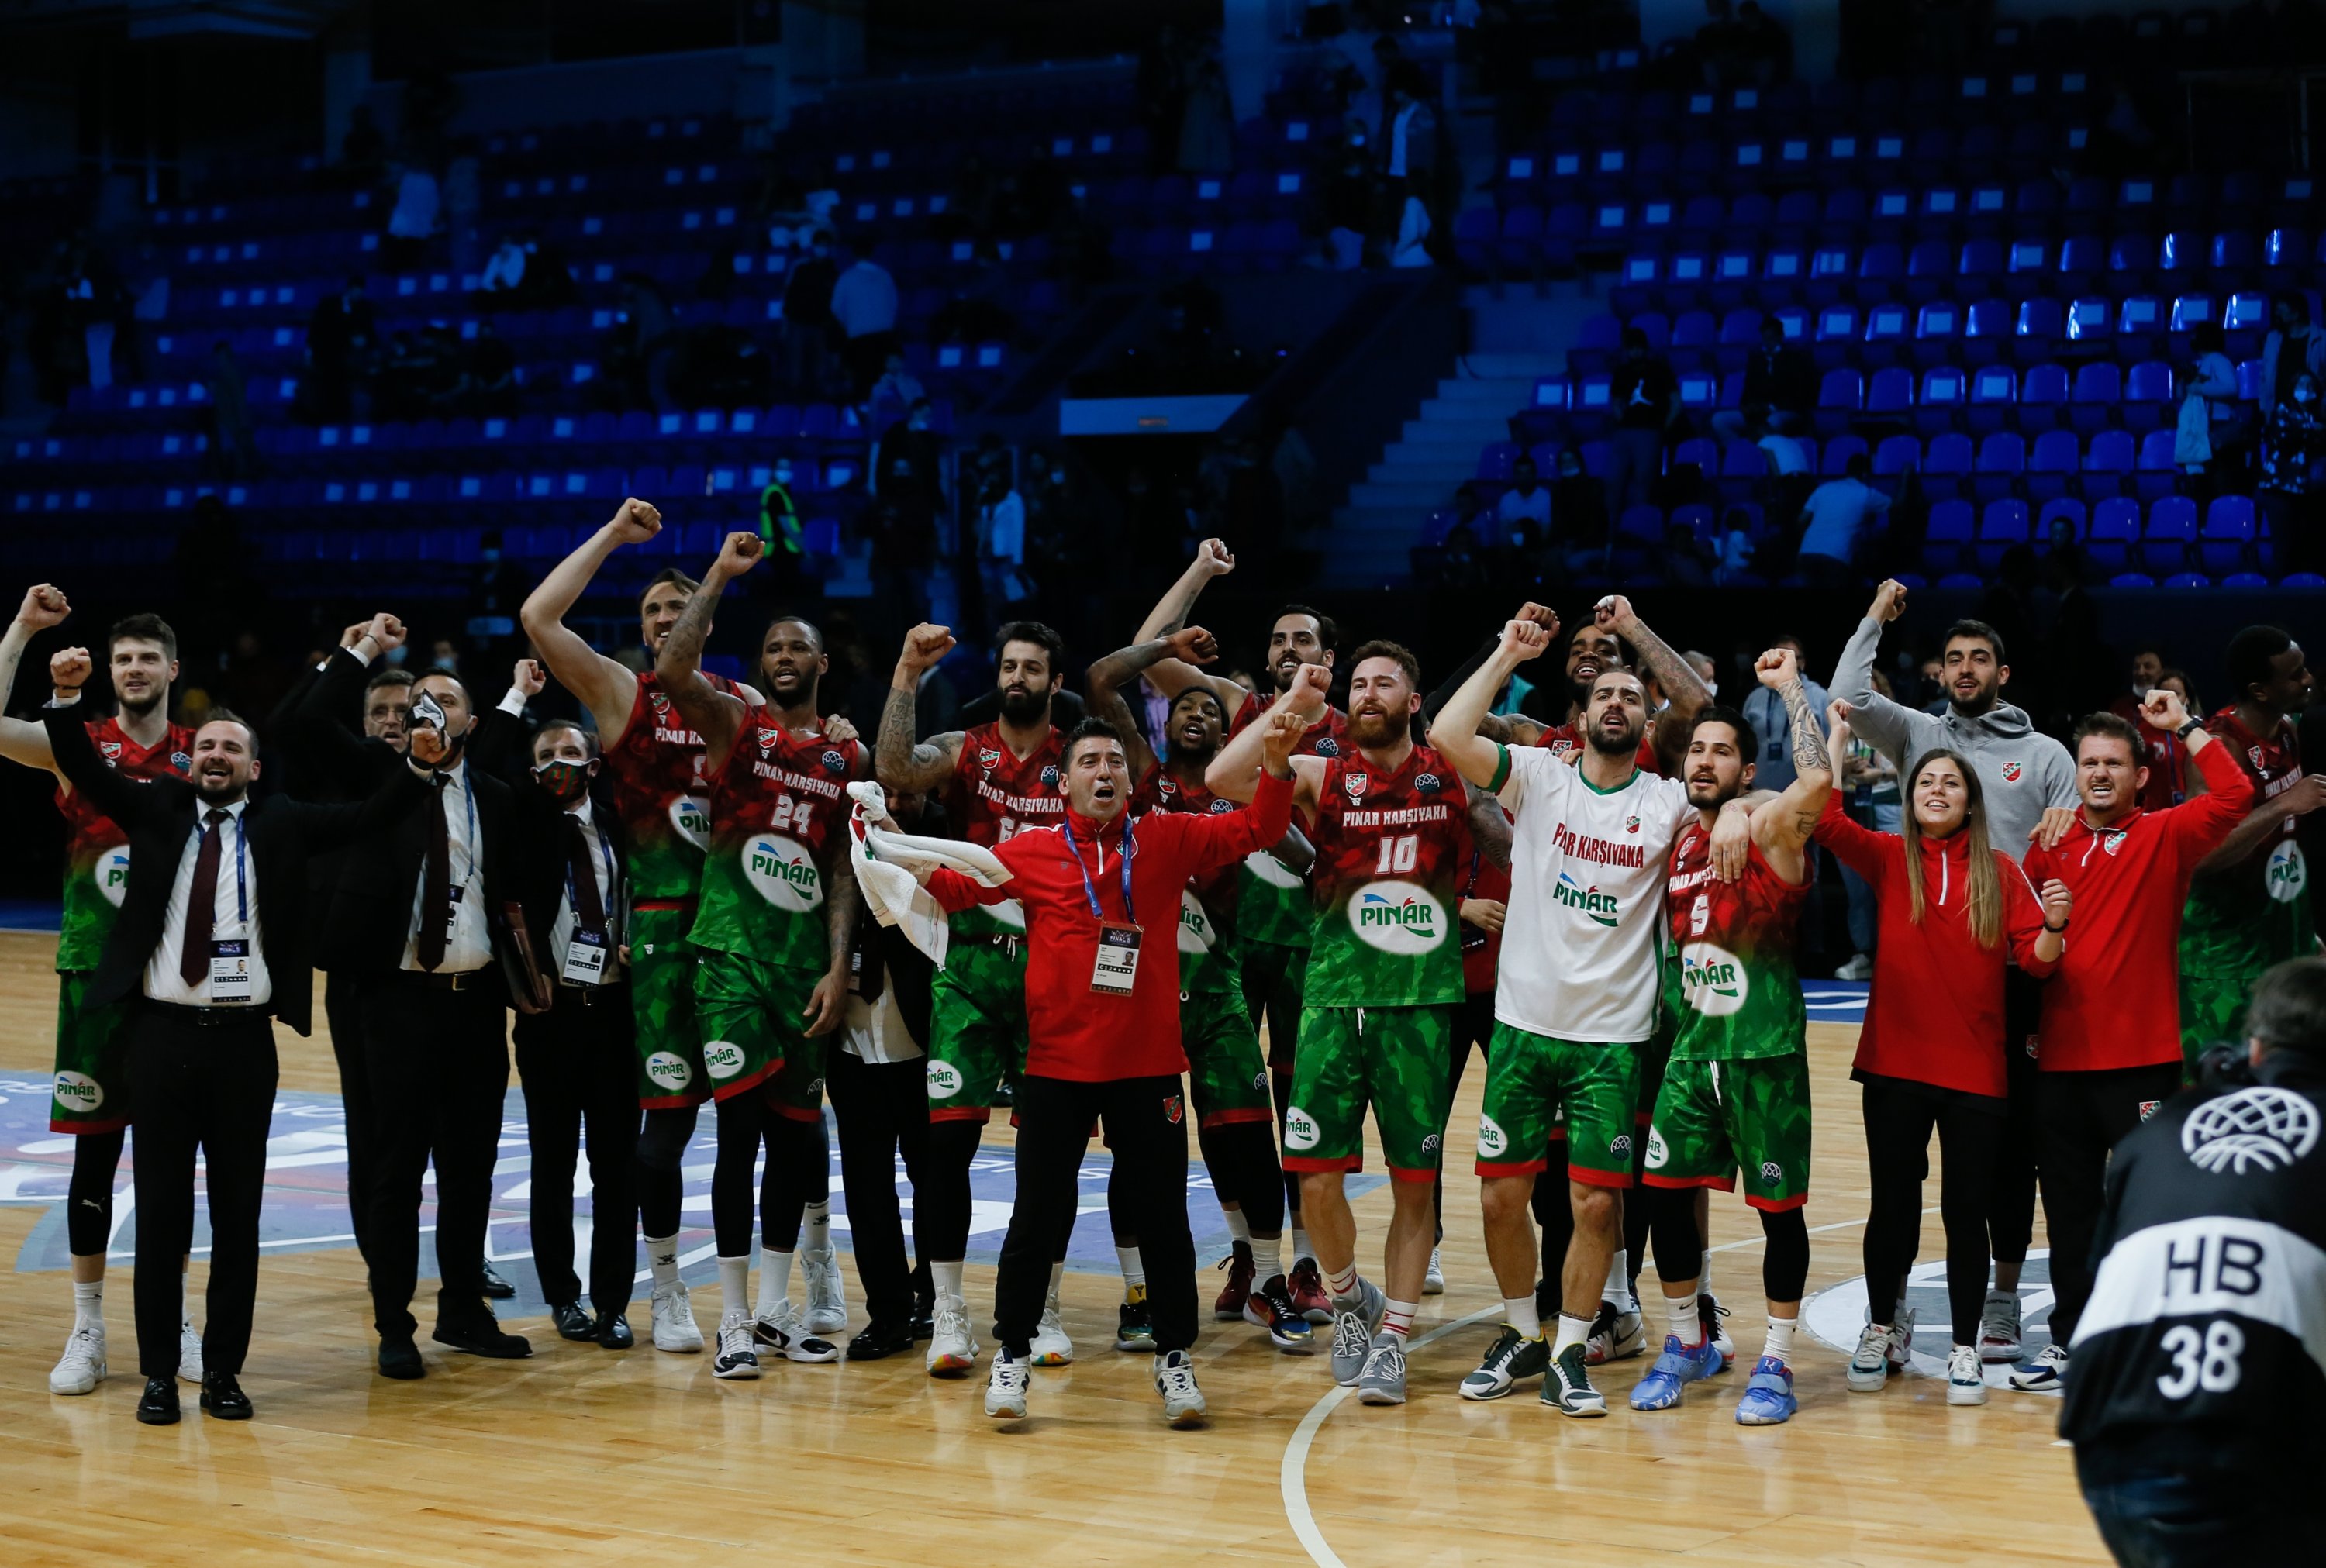 Pınar Karşıyaka squad celebrates after FIBA Basketball Champions League semifinal victory against Casademont Zaragoza at the Entertainment Complex Nagorny in Nizhny Novgorod, Russia, May 7, 2021. (AA Photo)